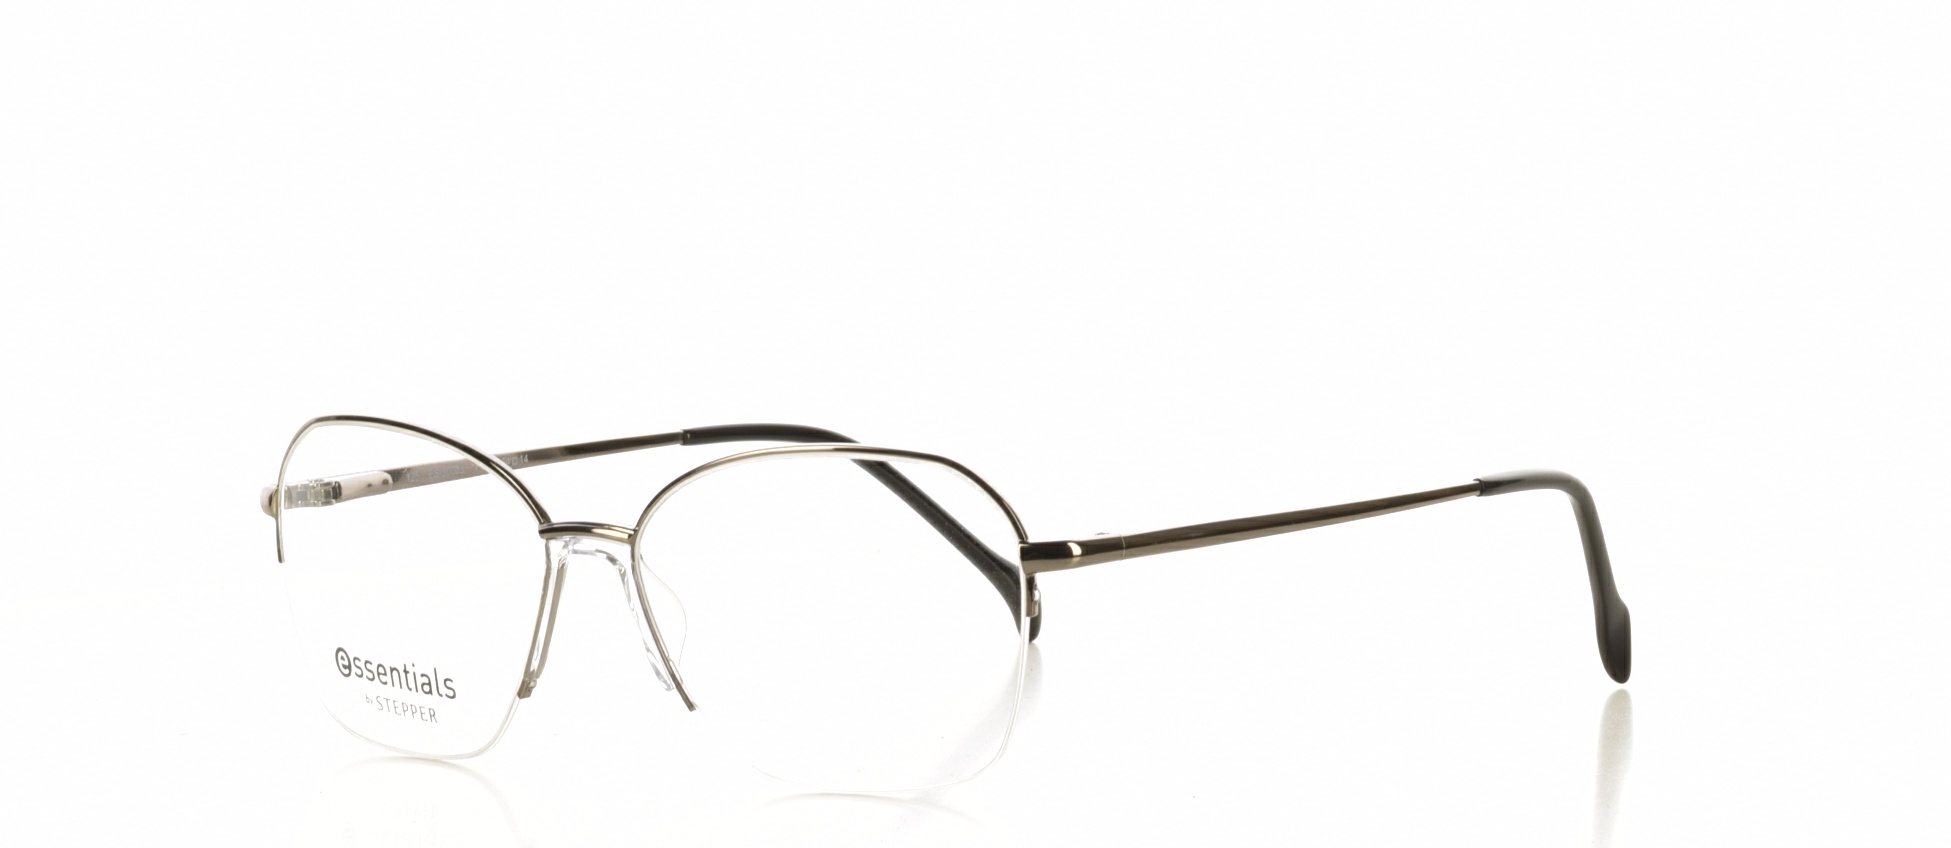 Rama ochelari vedere Stepper Essentials